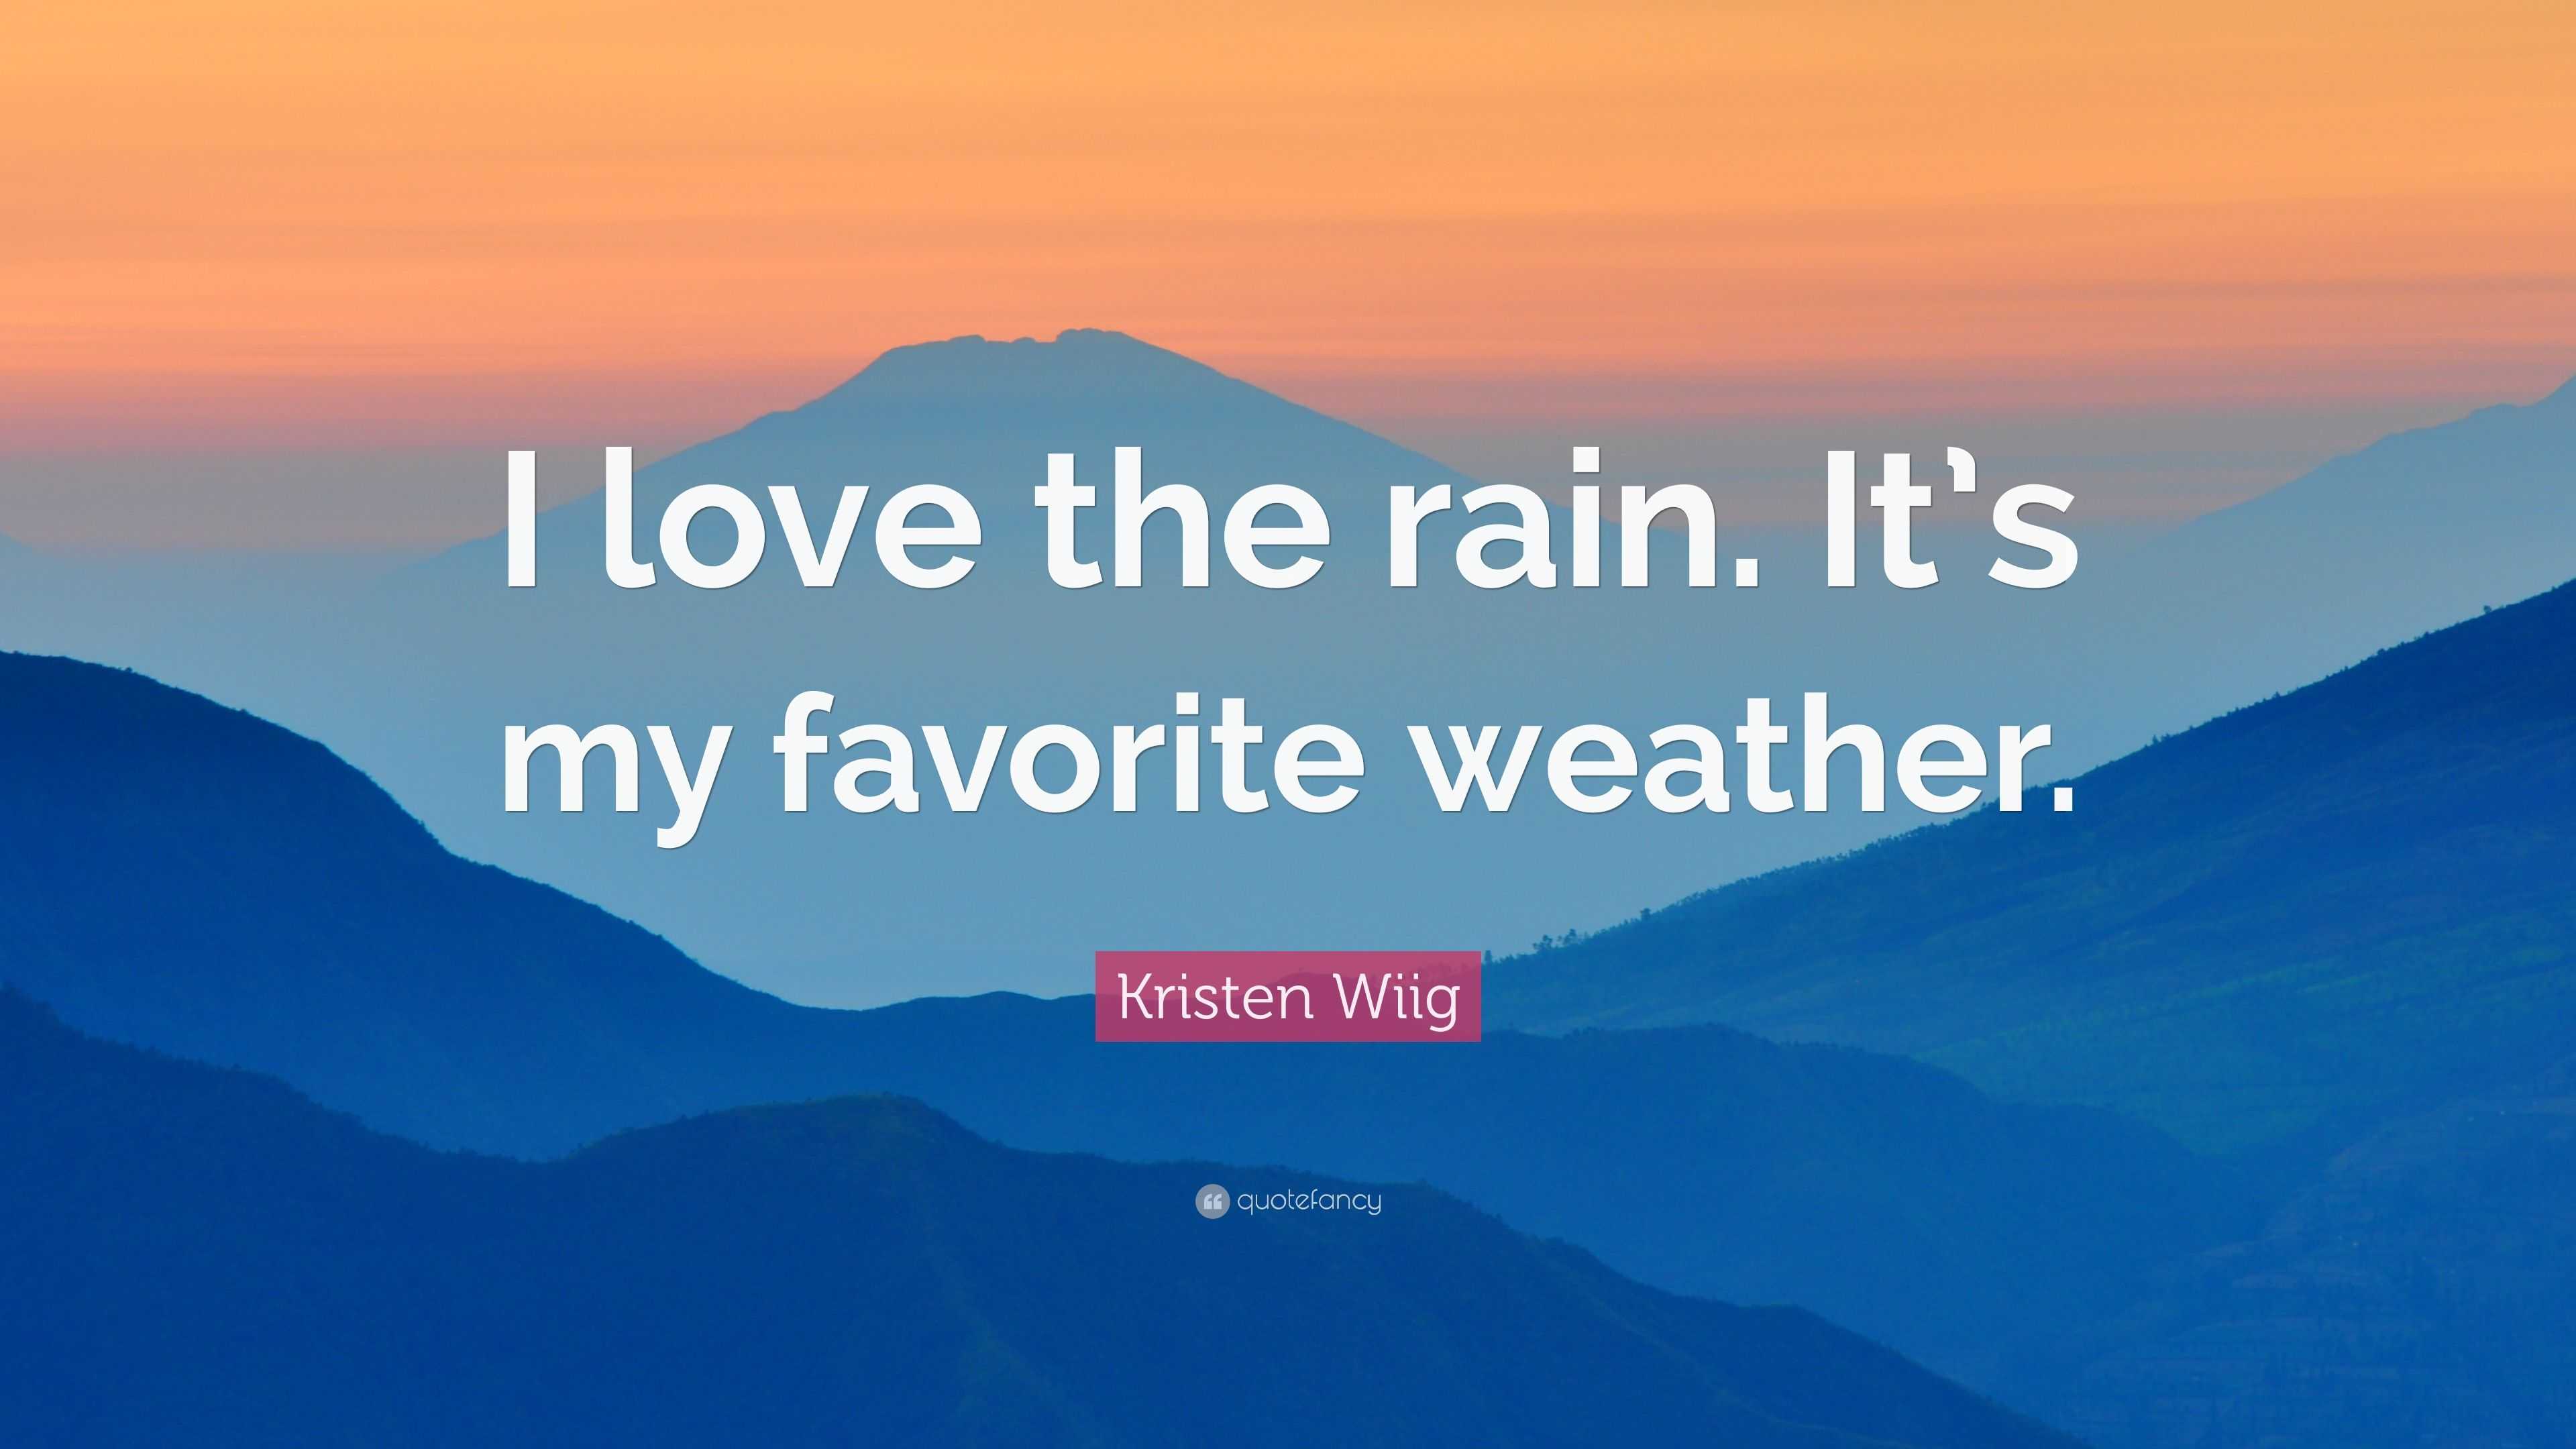 Kristen Wiig Quote: "I love the rain. It's my favorite weather."